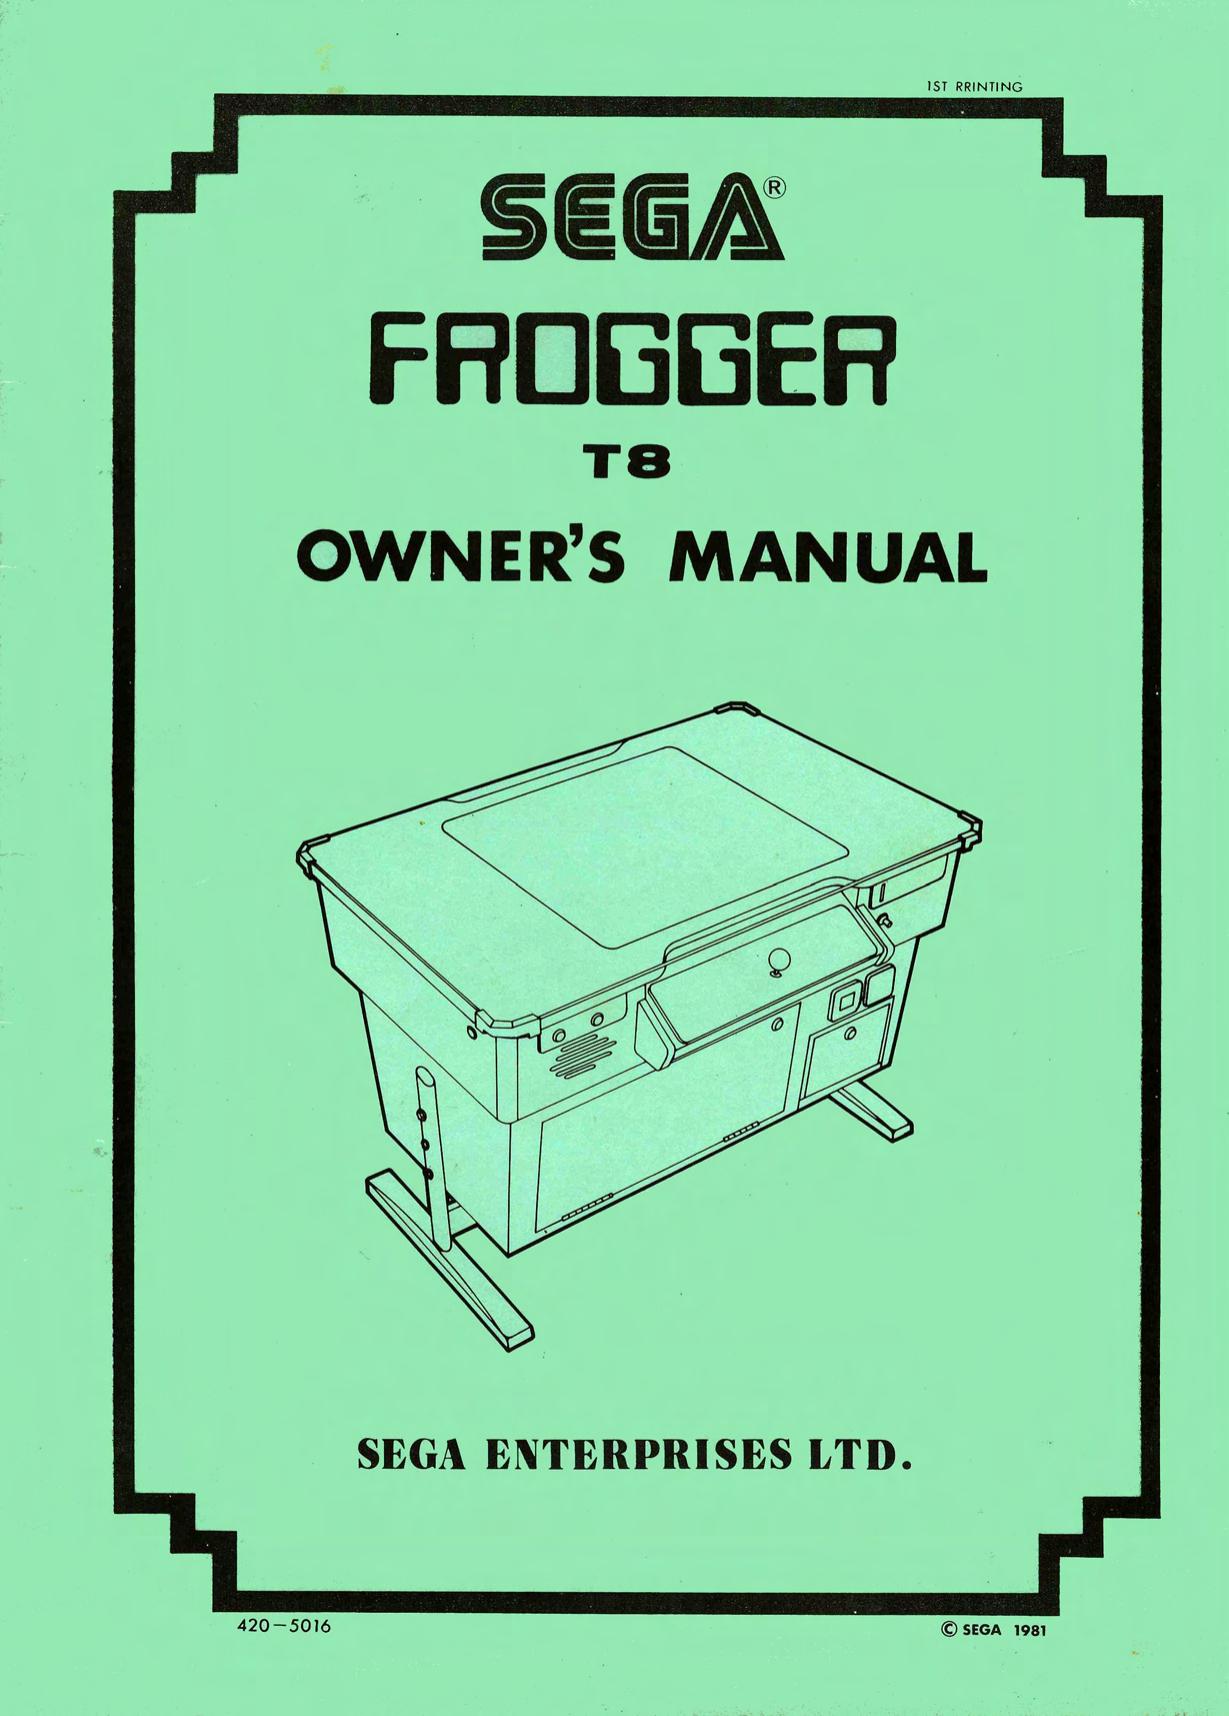 Frogger Cocktail (Sega T8 420-5016 1st Printing 1981)